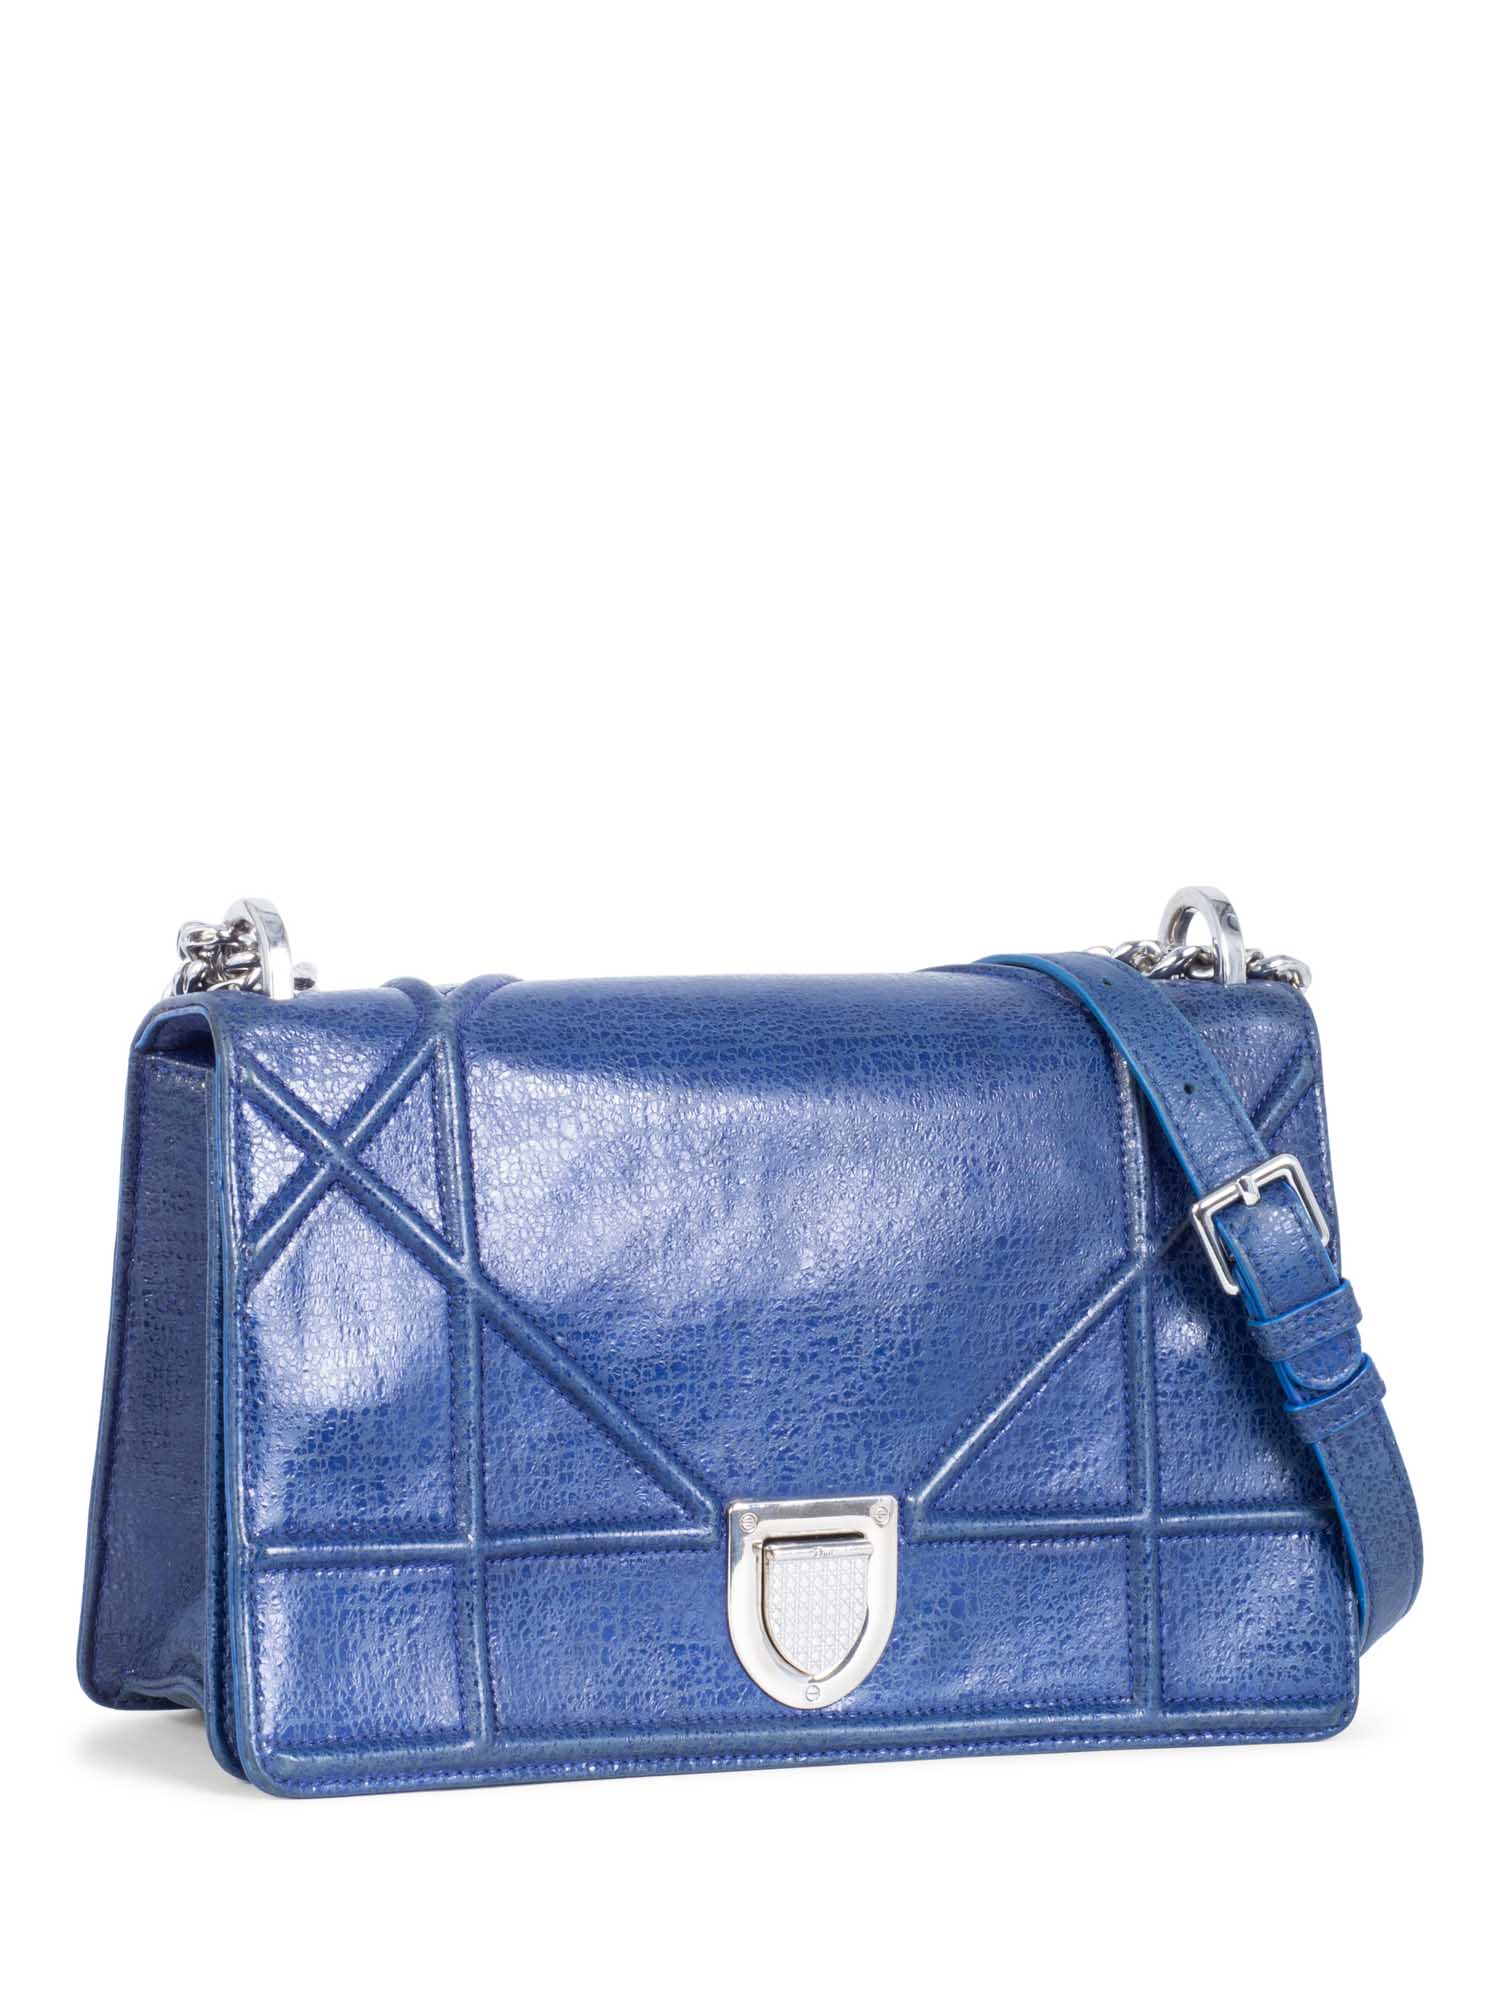 Christian Dior Embossed Leather Diorama Messenger Bag Blue